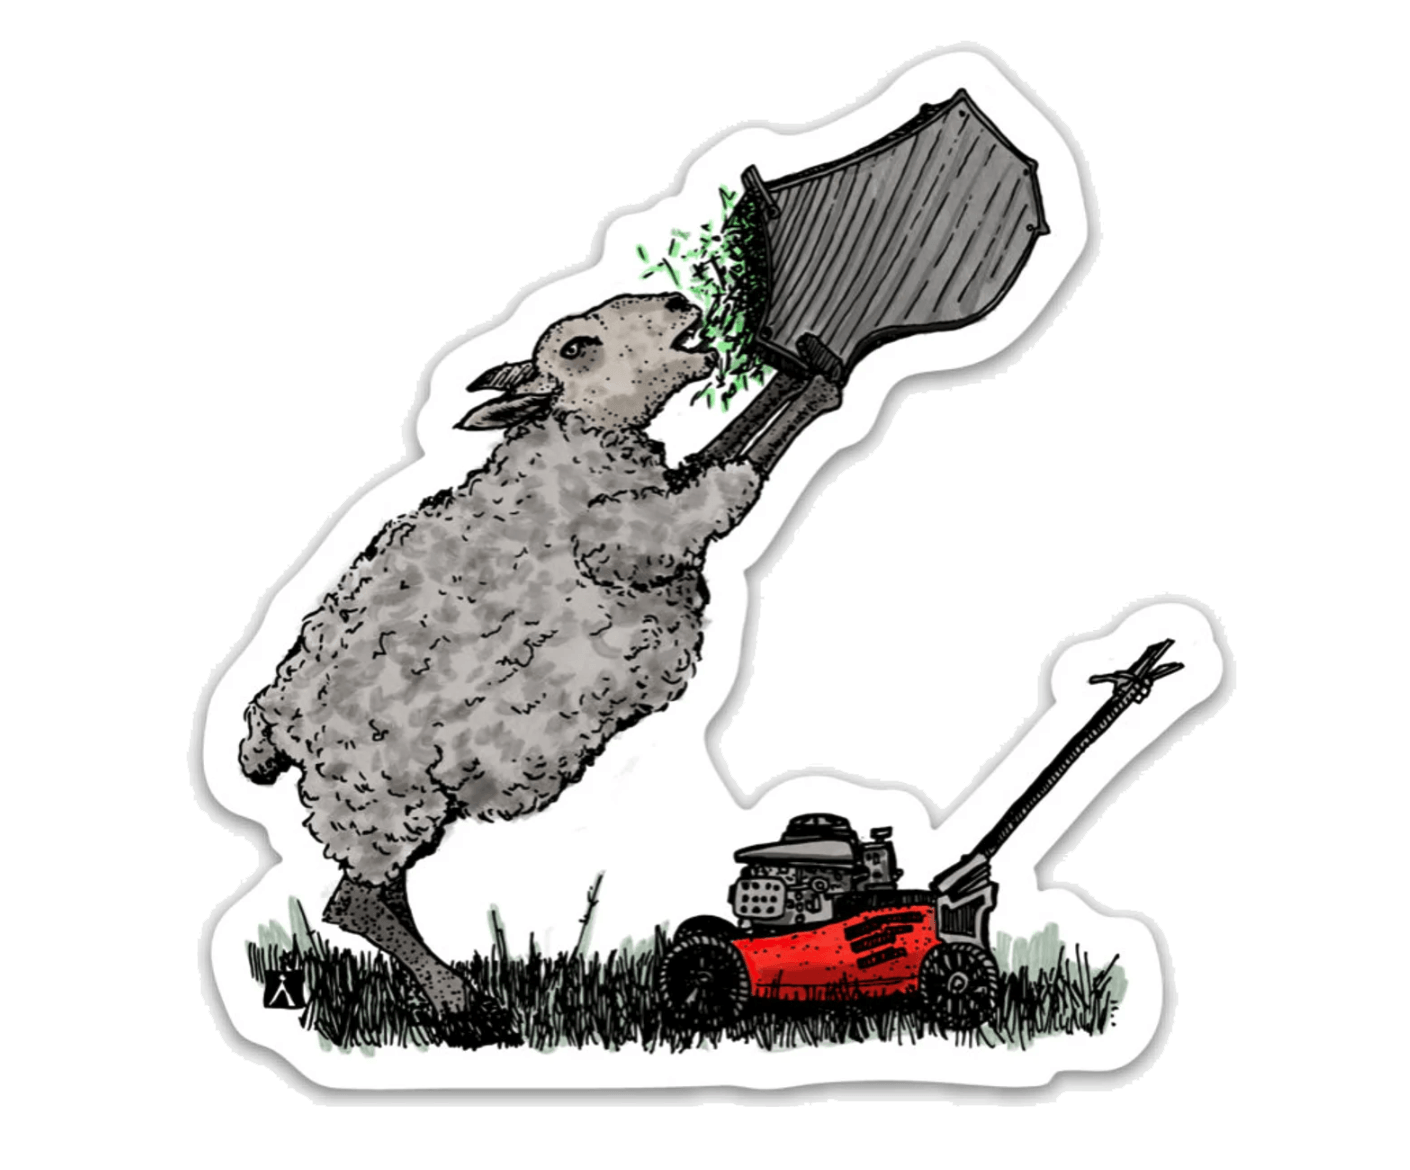 BellavanceInk: Pen & Ink Illustration of Sheep Devouring Grass From Their Lawn Mower Clippings Bag - BellavanceInk